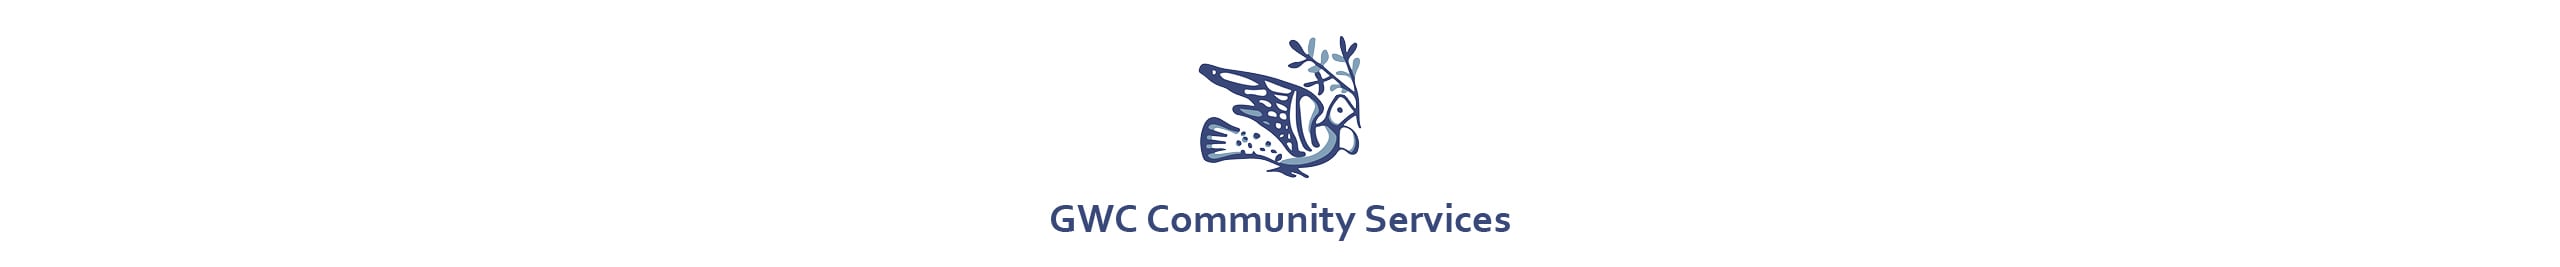 GWC Community Services Logo